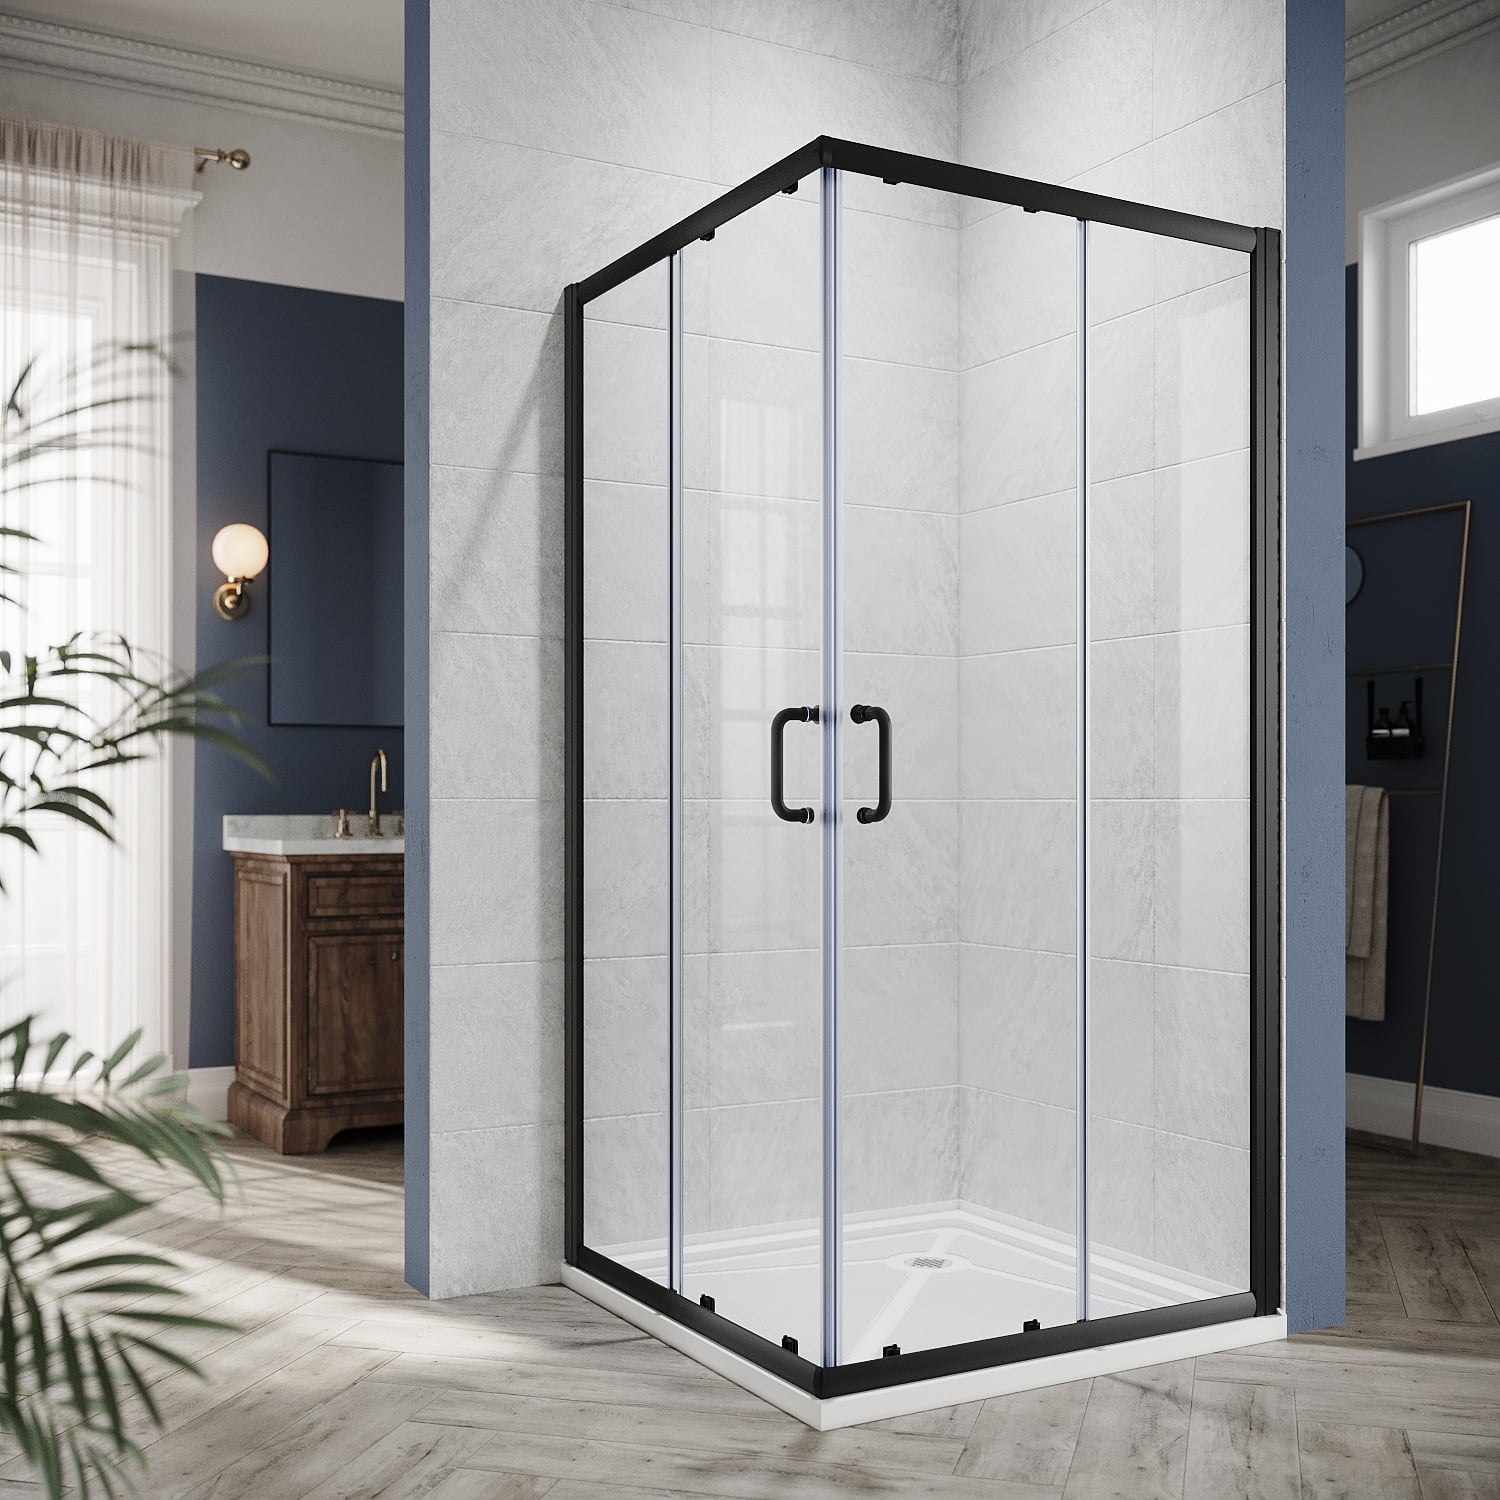 Sunny Shower Corner Sliding Shower Enclosure 36 In D X 36 In W X 72 In H Sliding Shower Door